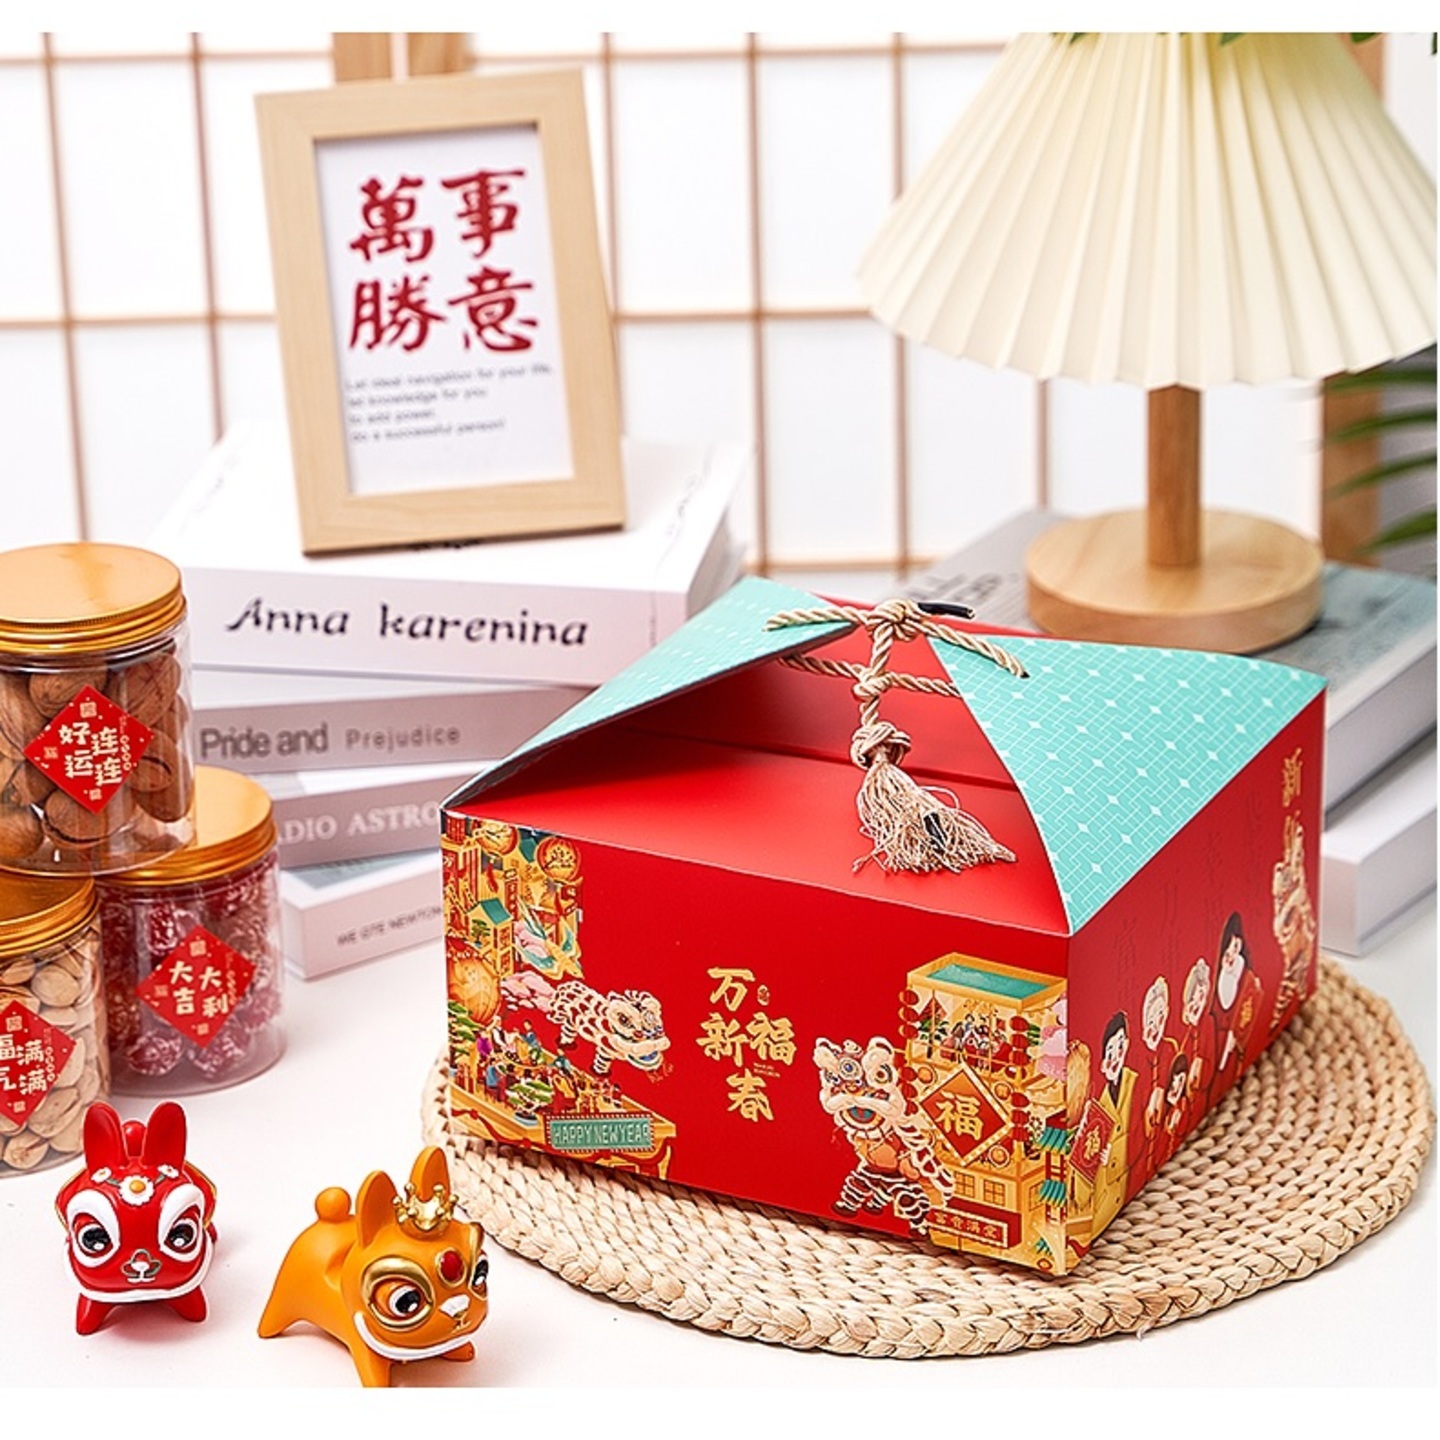 2023 CNY Premium Gift Box - Lion Dance Japanese Style CNY Box 4 Bottles with Gift Box & Bento Style Bag